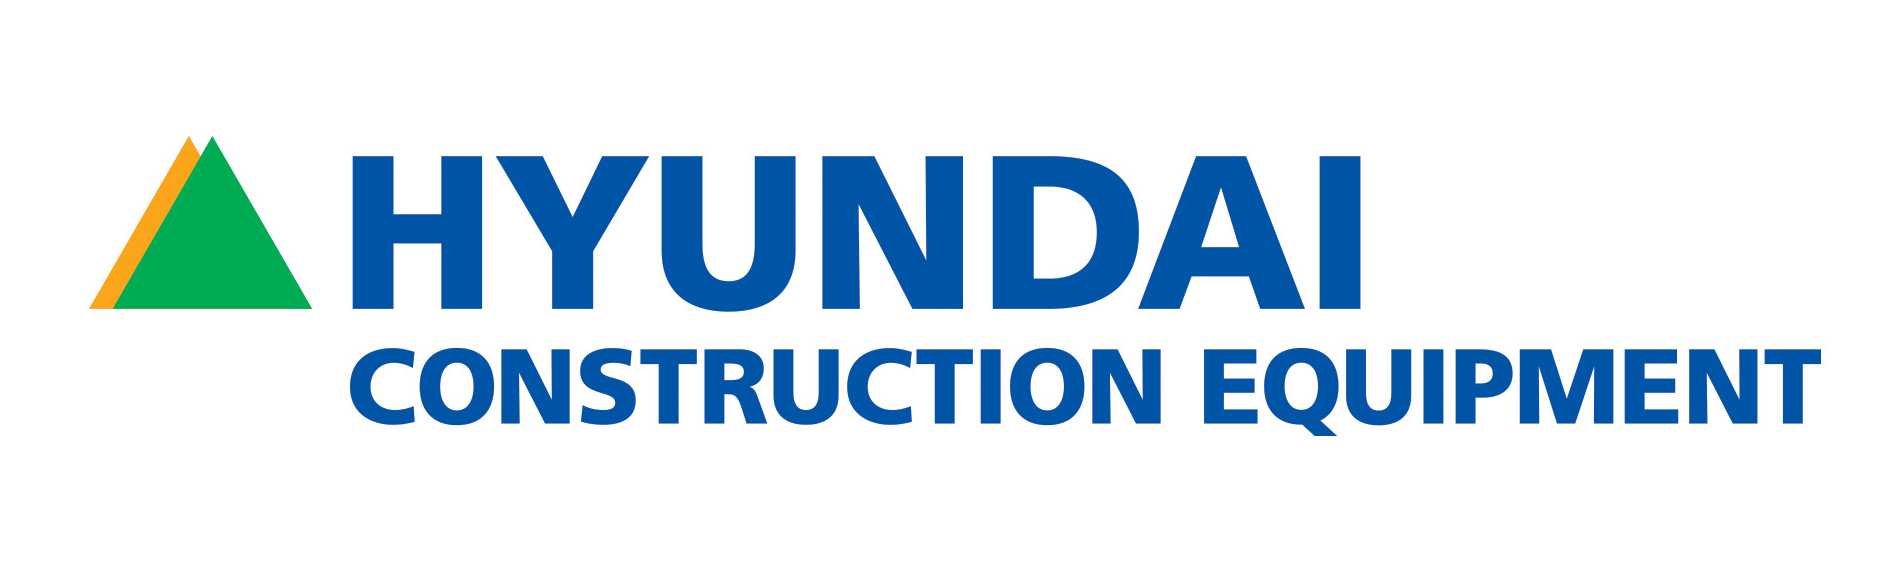 hyundai construction equipment Kansas City CSTK Missouri buy lease rent excavator backhoe